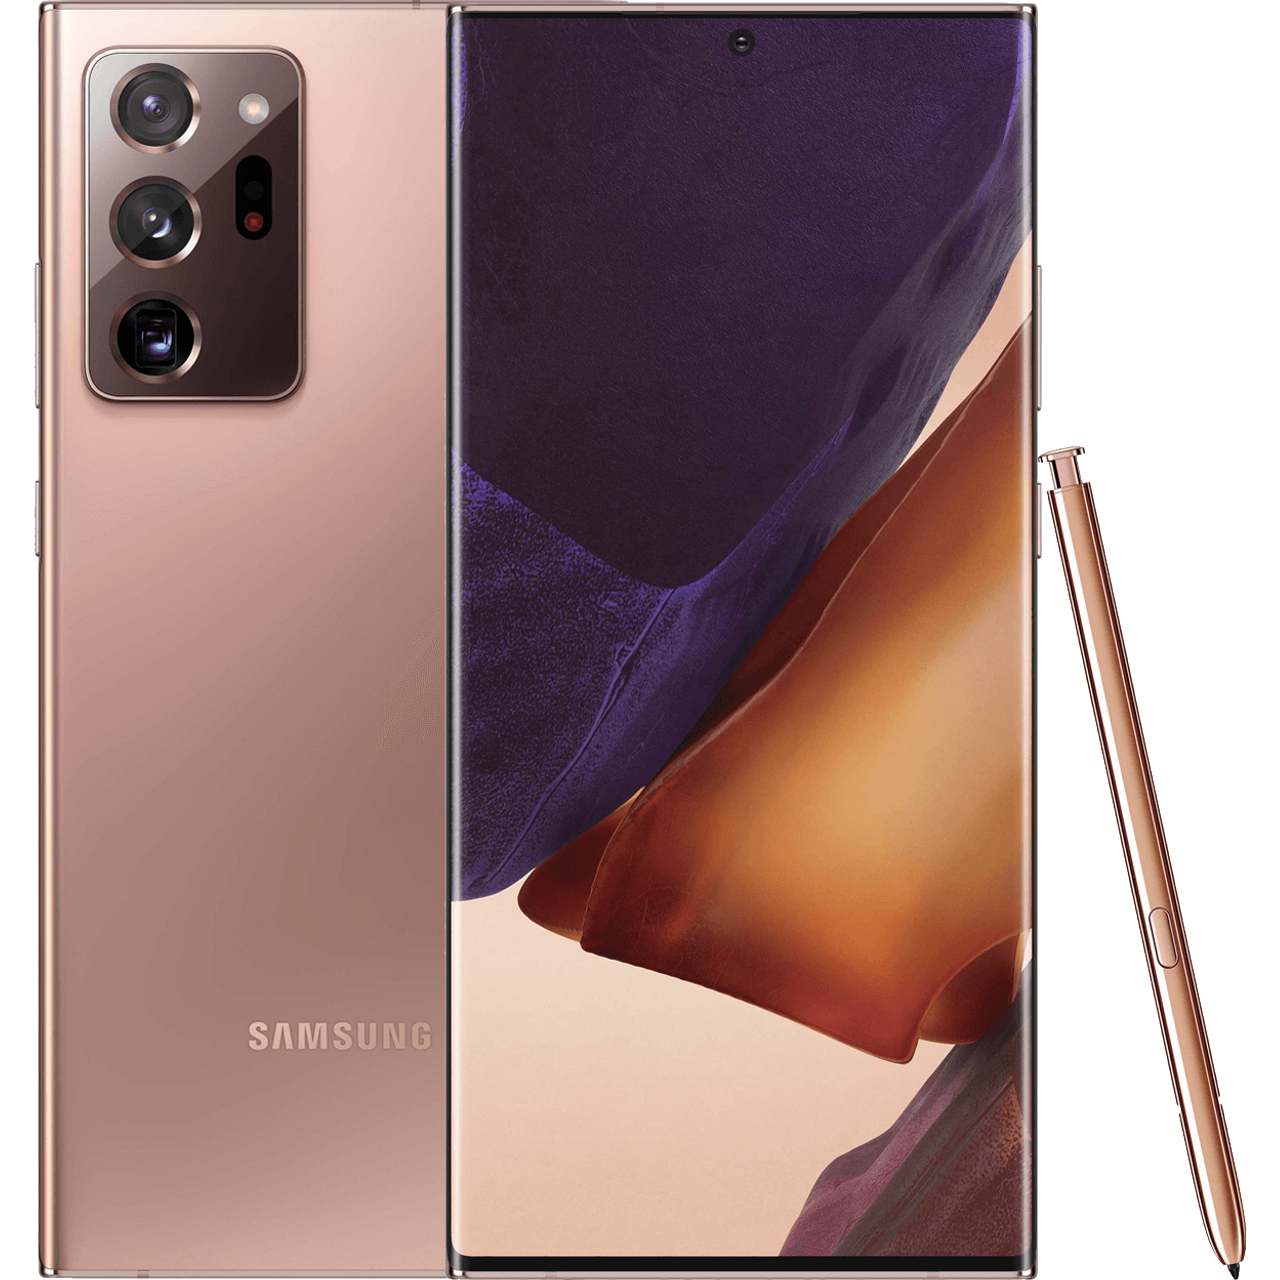 Samsung Galaxy Note20 Ultra 5G 256GB Smartphone in Mystic Bronze Review